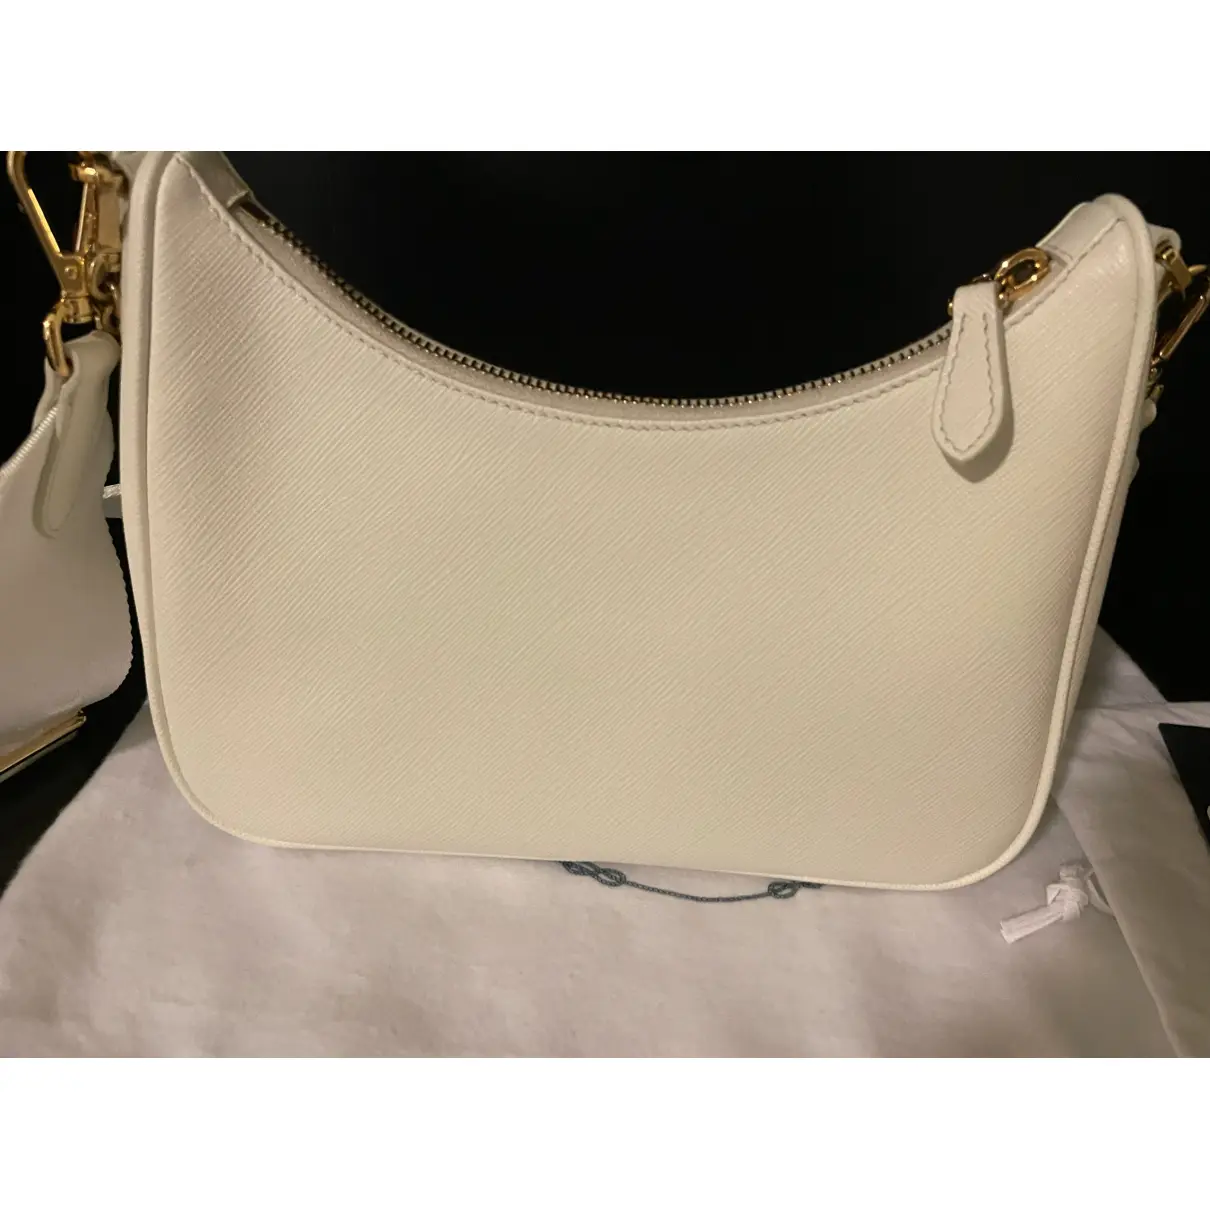 Buy Prada Re-edition leather handbag online